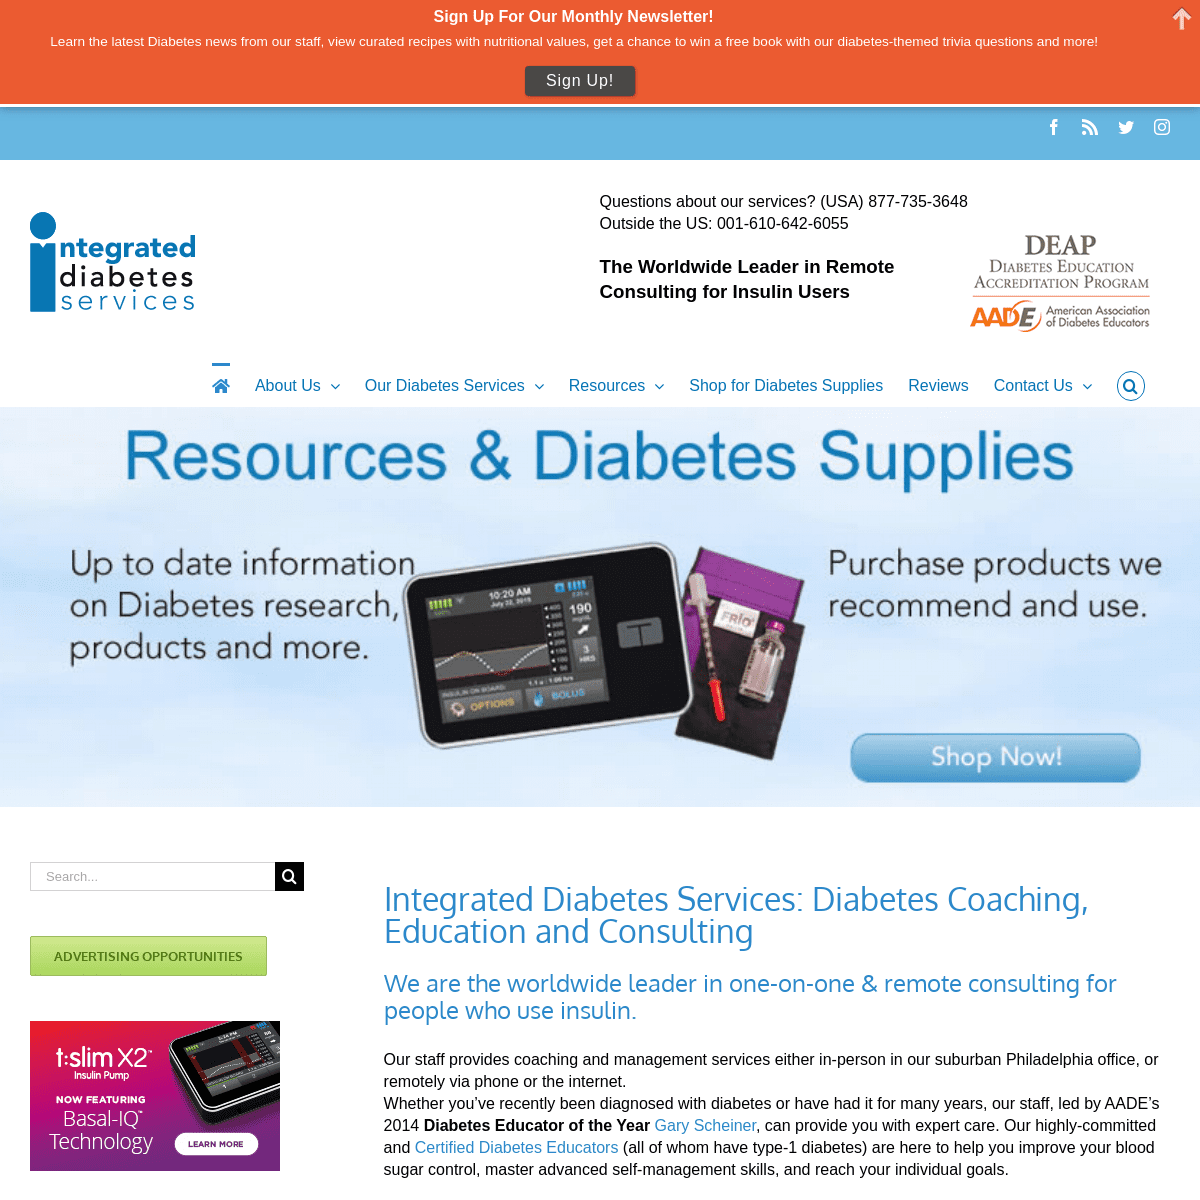 A complete backup of integrateddiabetes.com